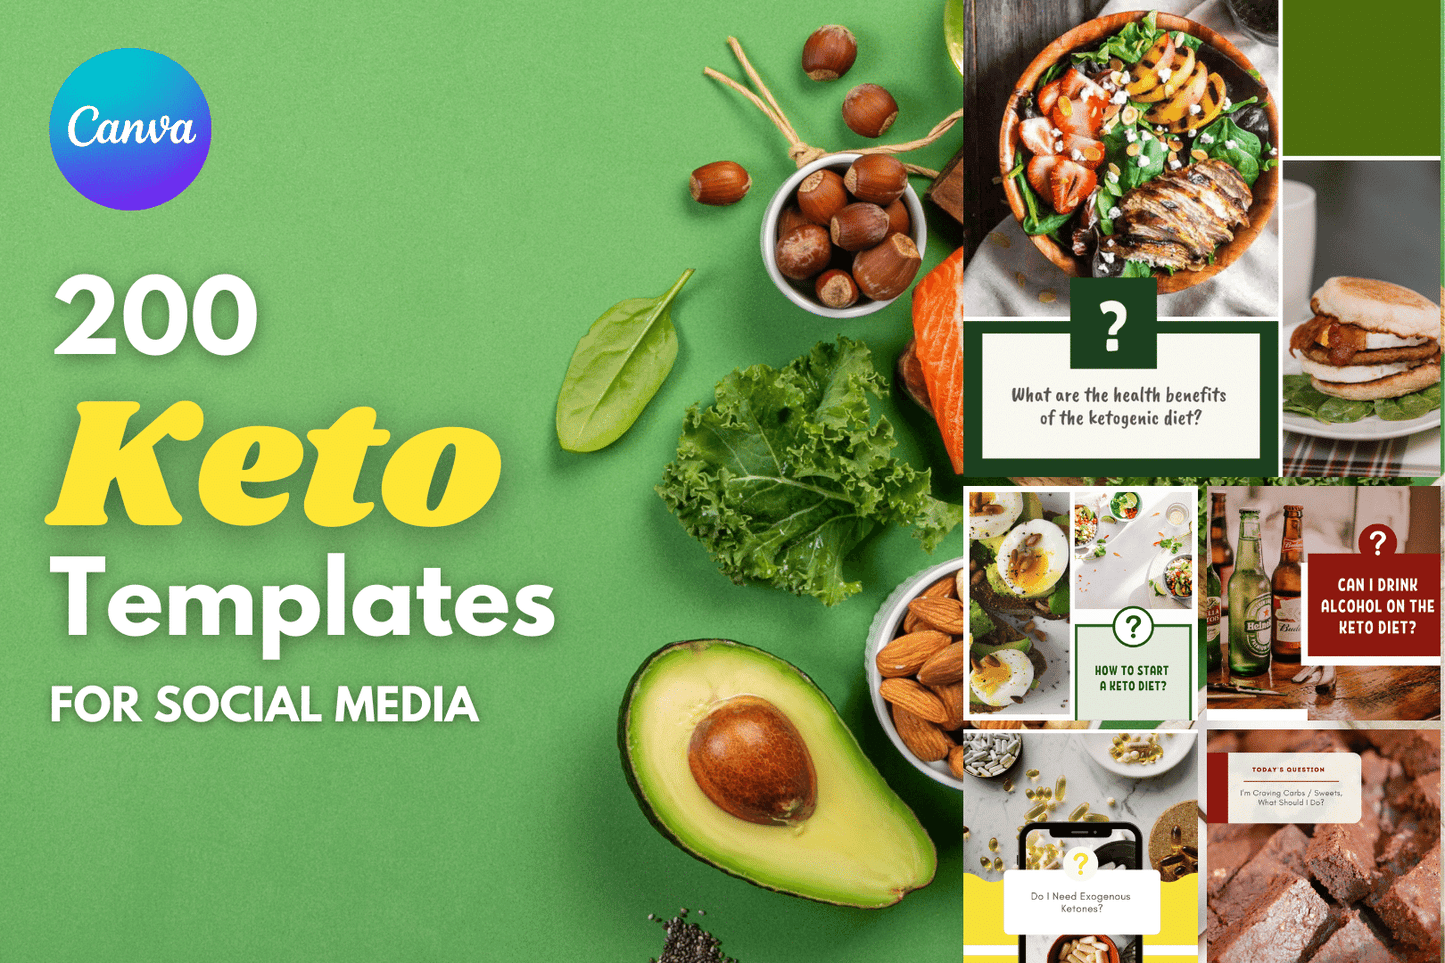 200 Keto Diet Templates for Social Media